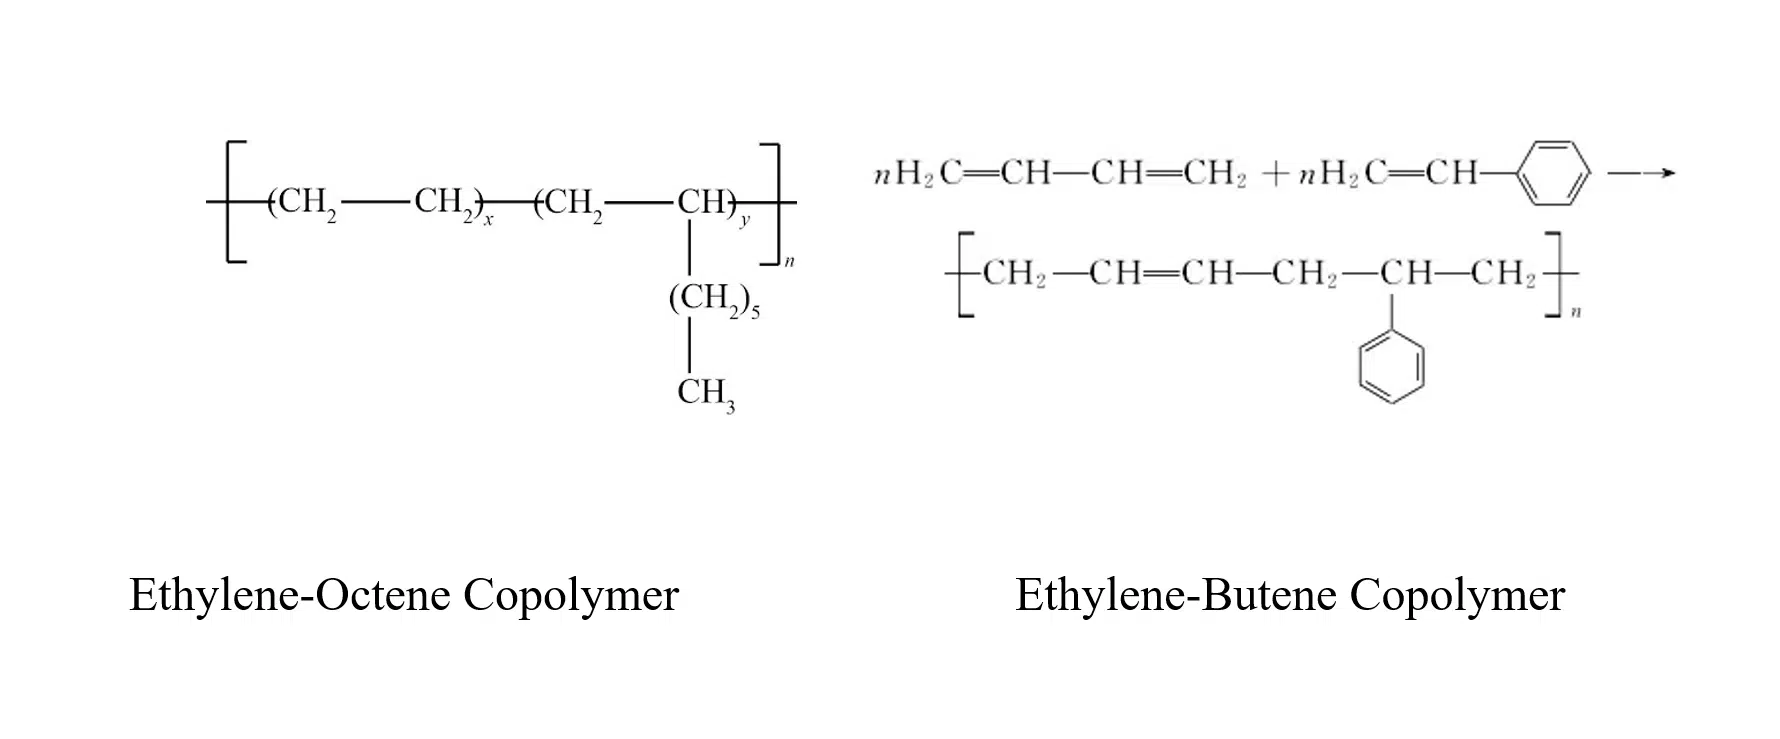 Ethylene-Octene Copolymer & Ethylene-Butene Copolymer